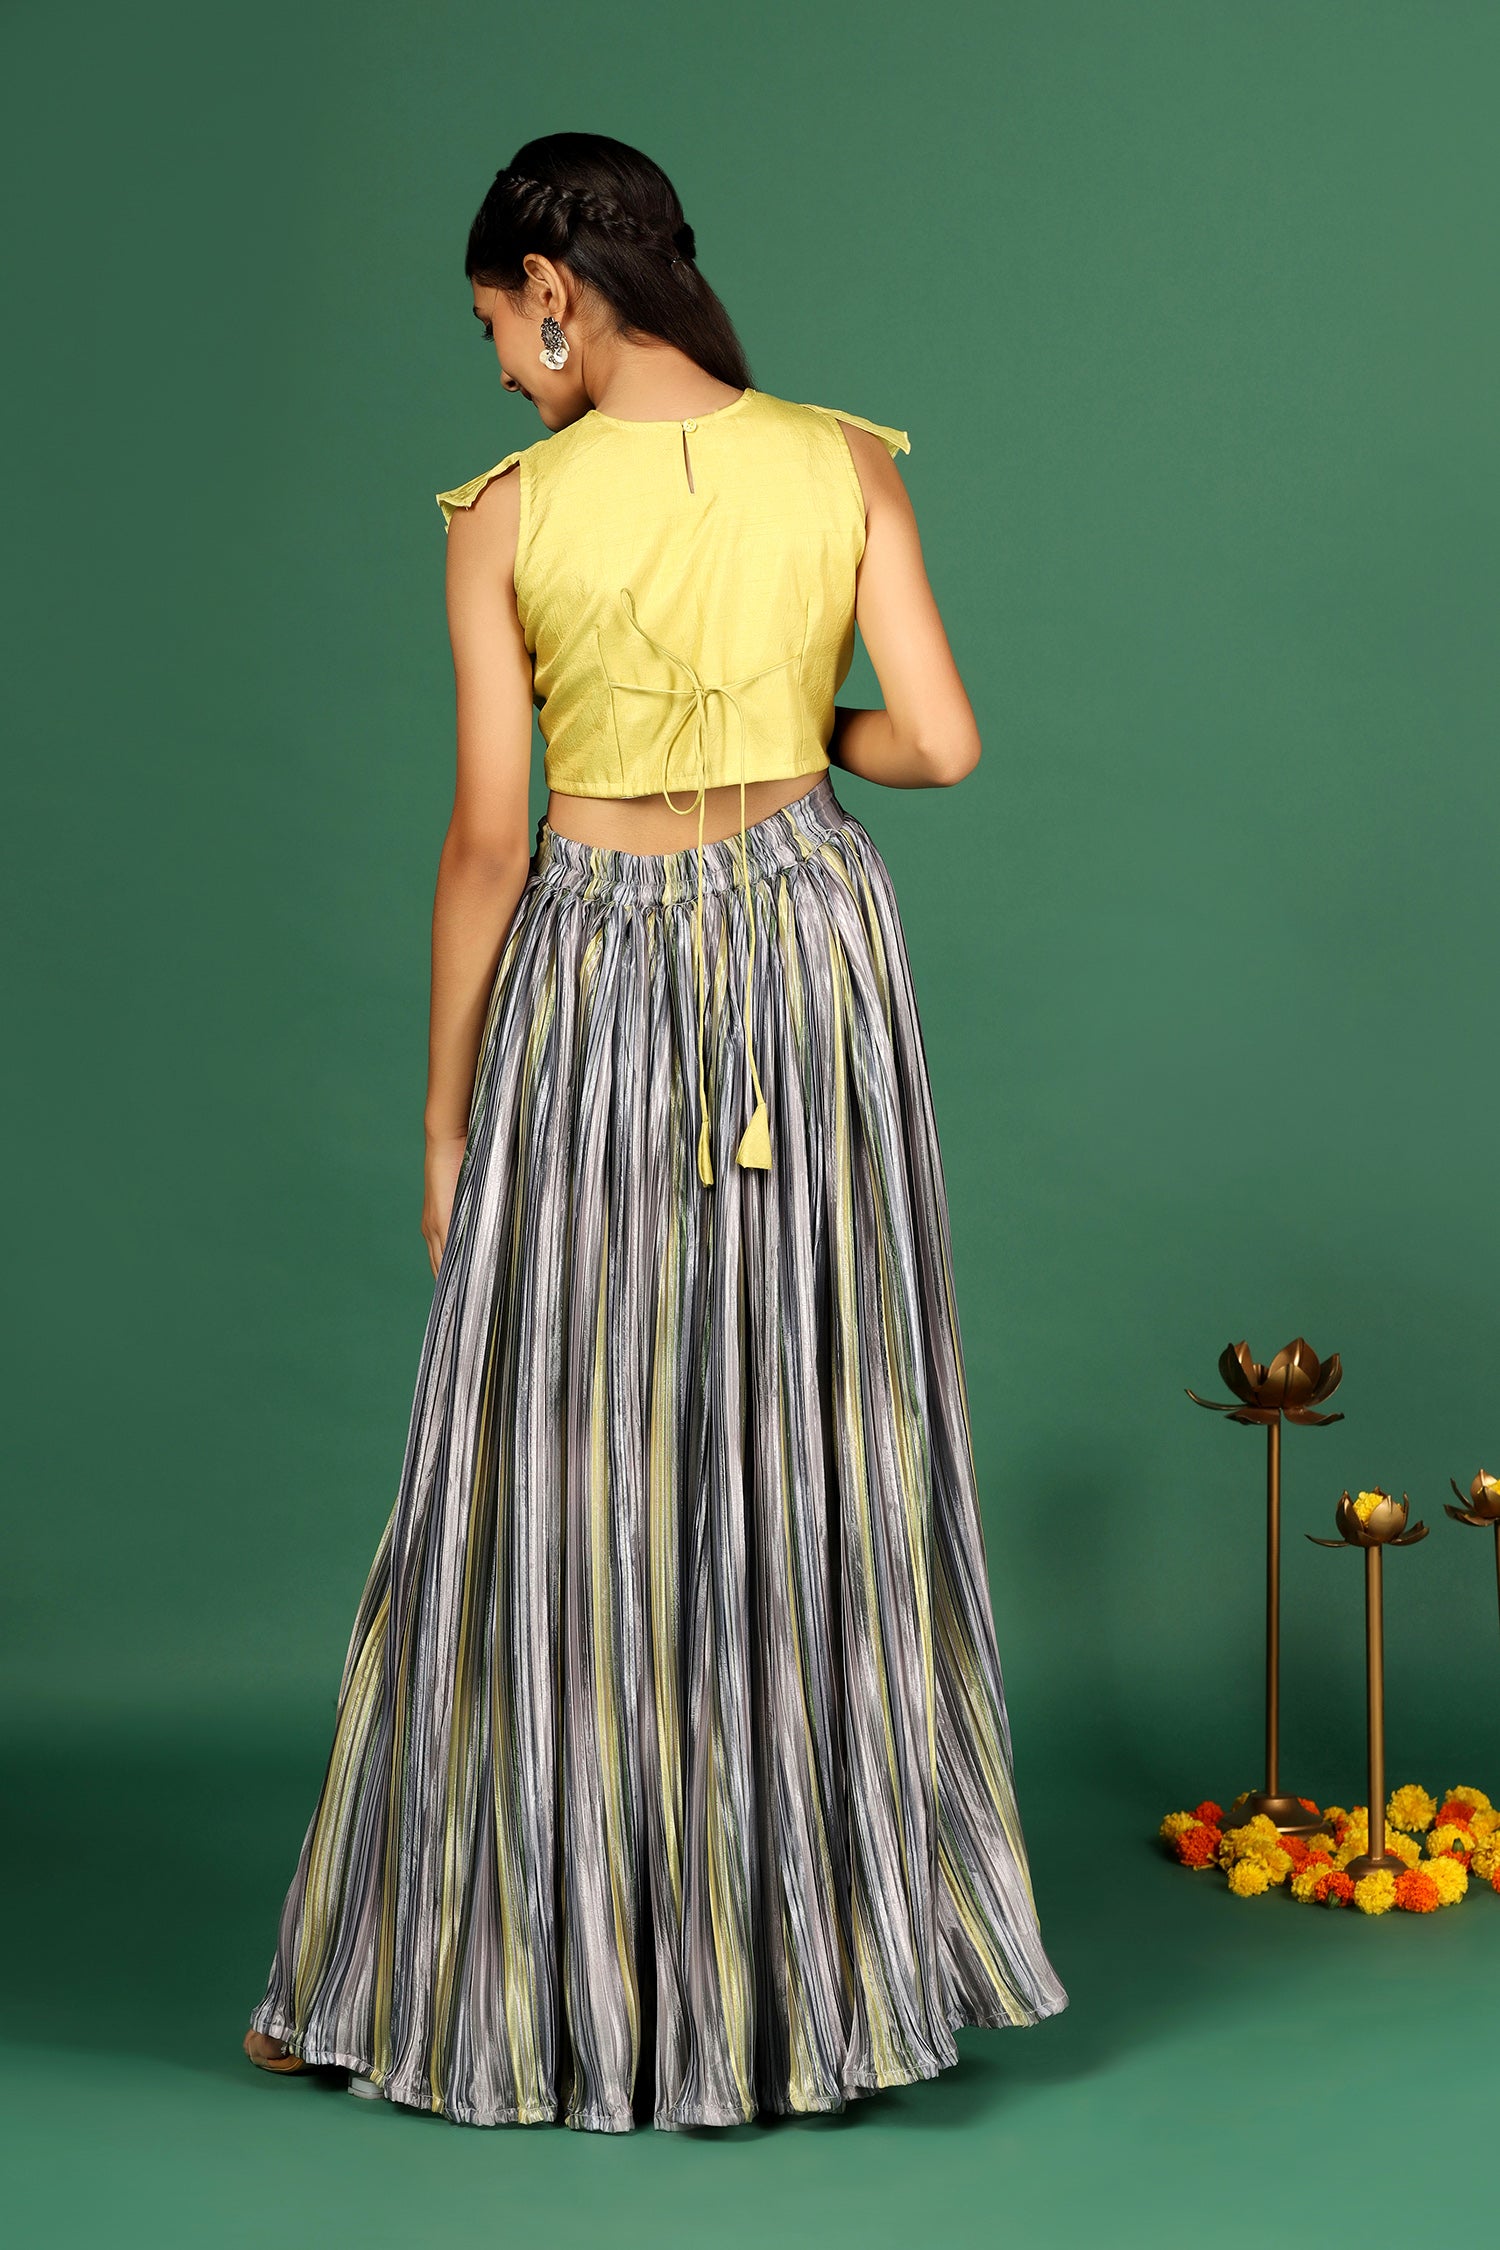 Girl's Yellow Chinon Embroidered Lehenga Choli Set - Fashion Dream